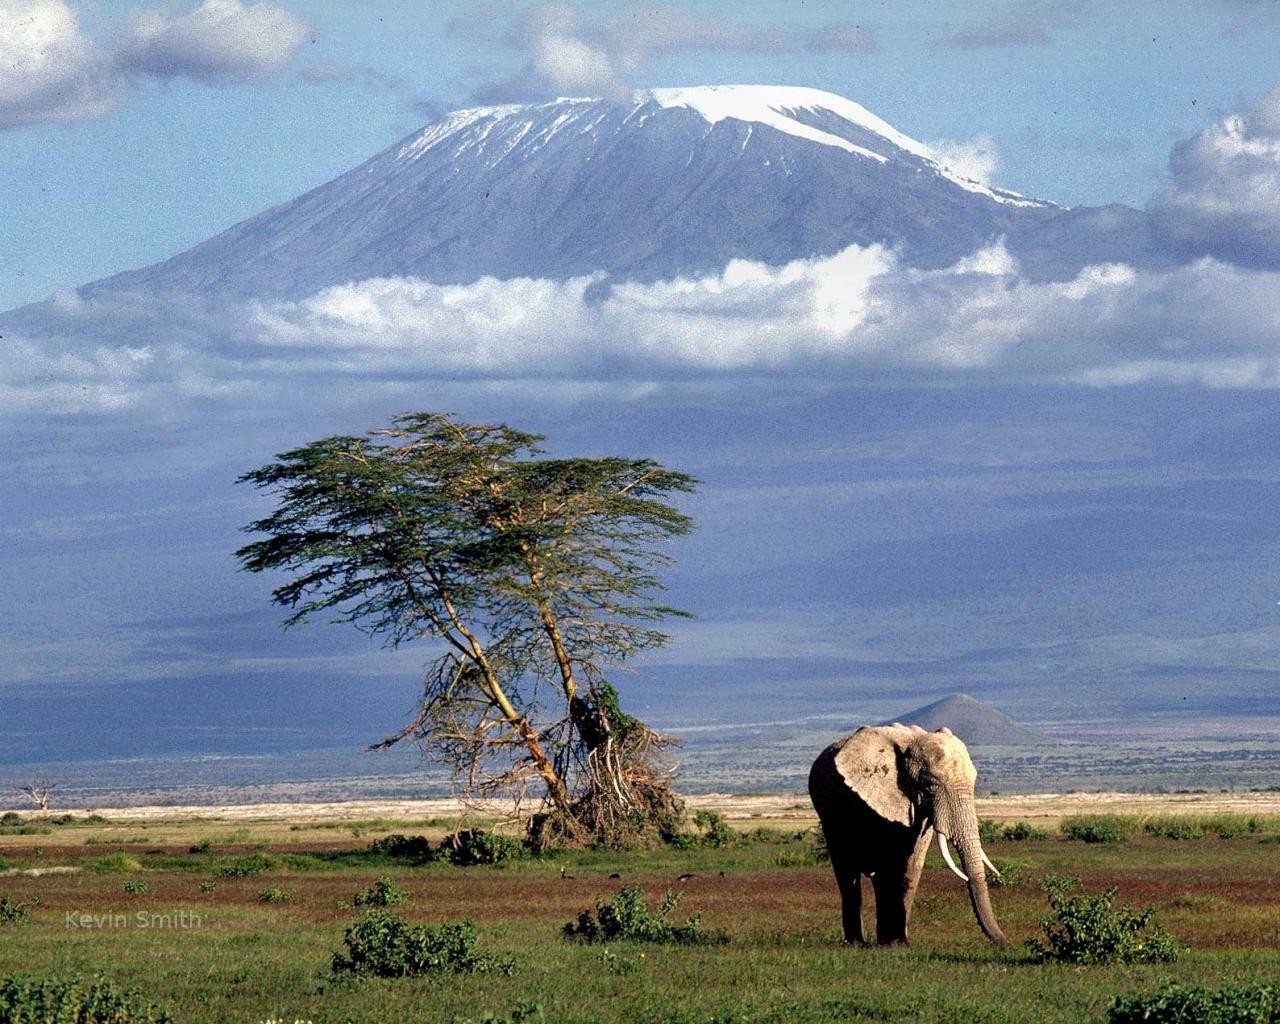 General 1280x1024 Africa Mount Kilimanjaro elephant animals nature landscape mountains mammals